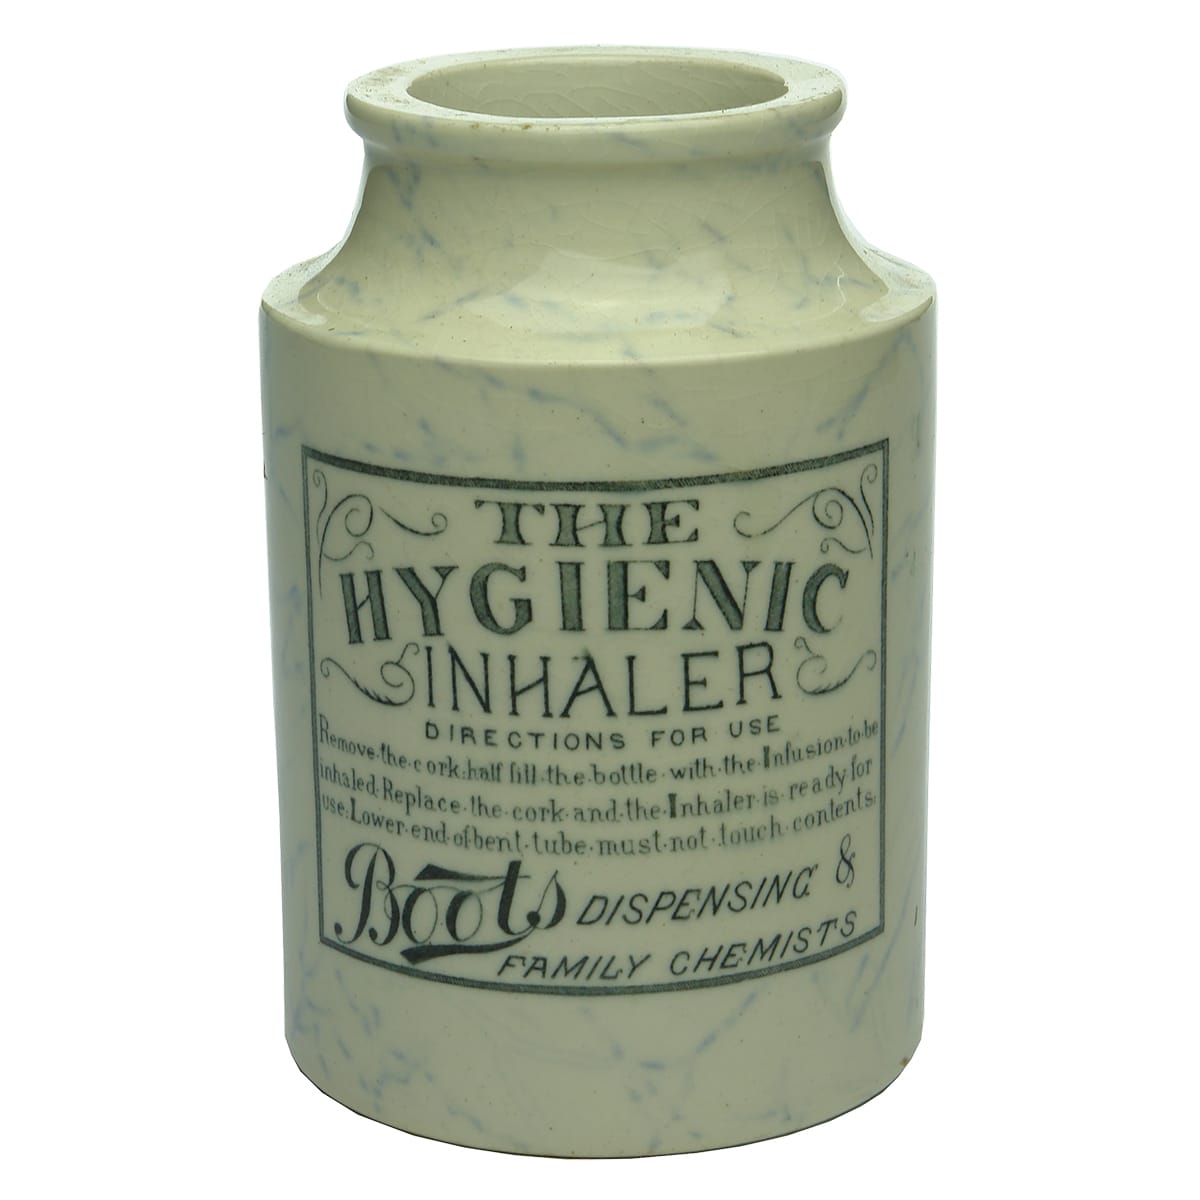 Inhaler. The Hygienic Inhaler, Boots.